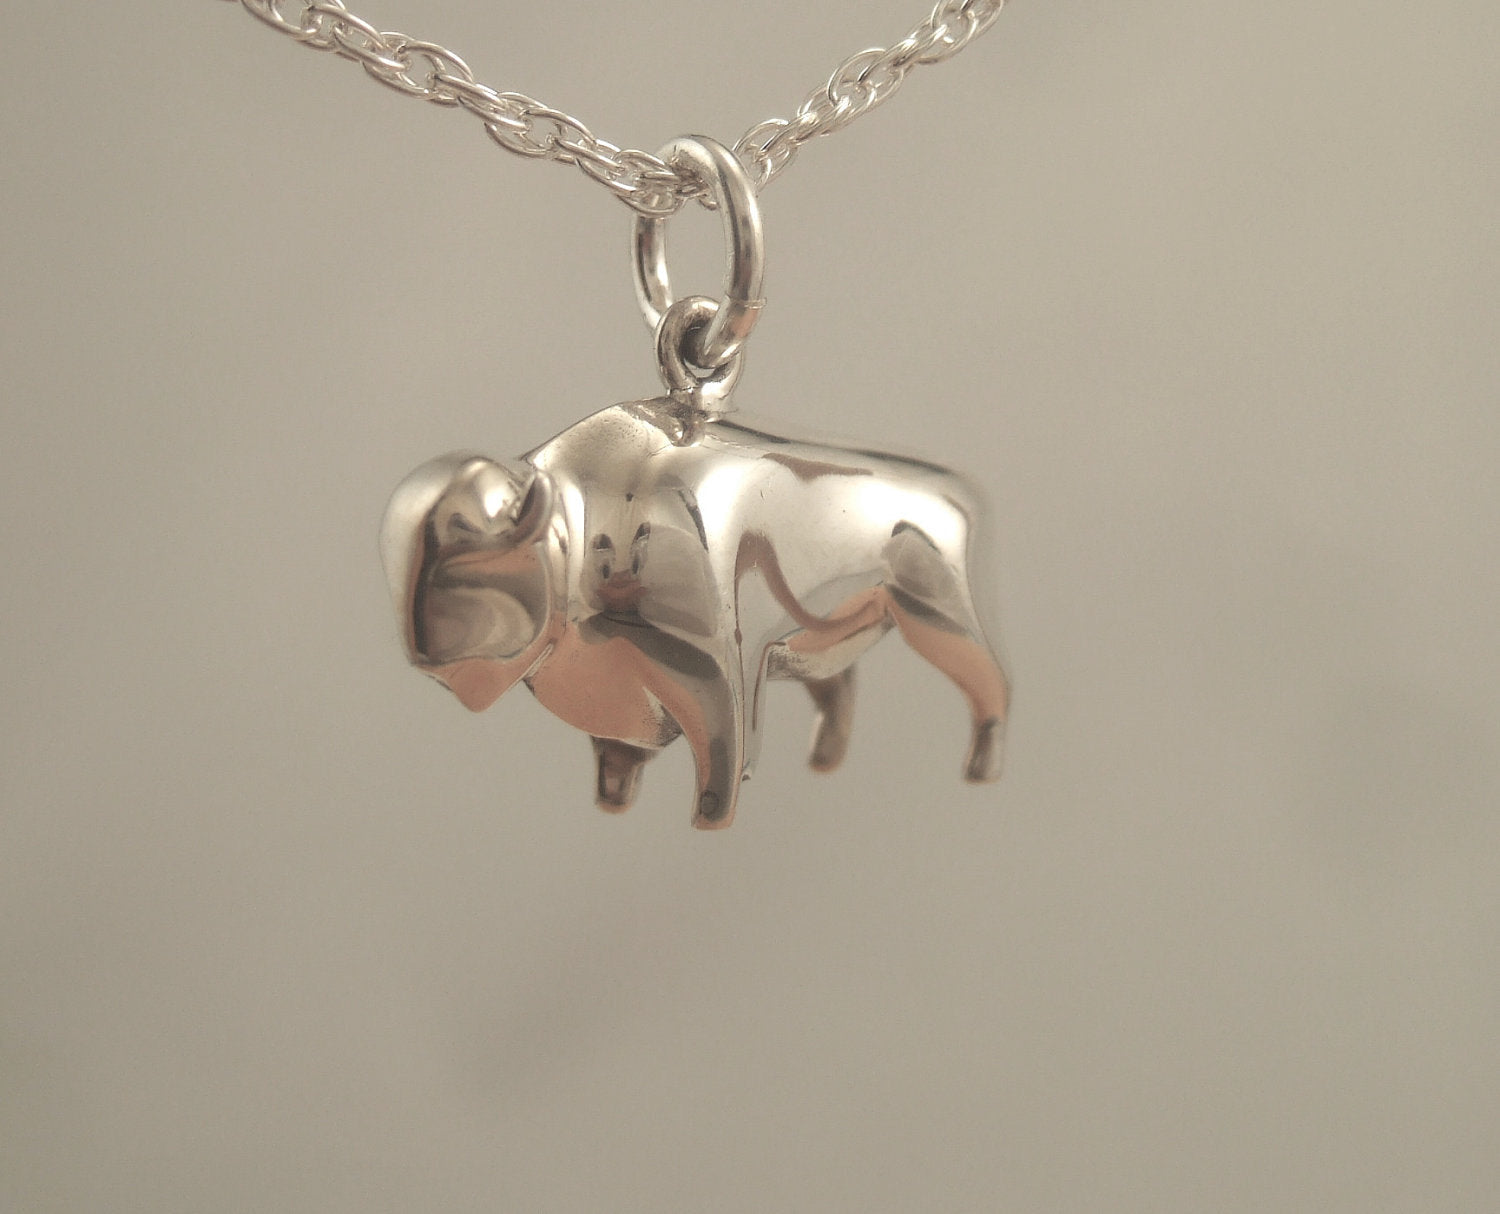 silver buffalo pendant/charm